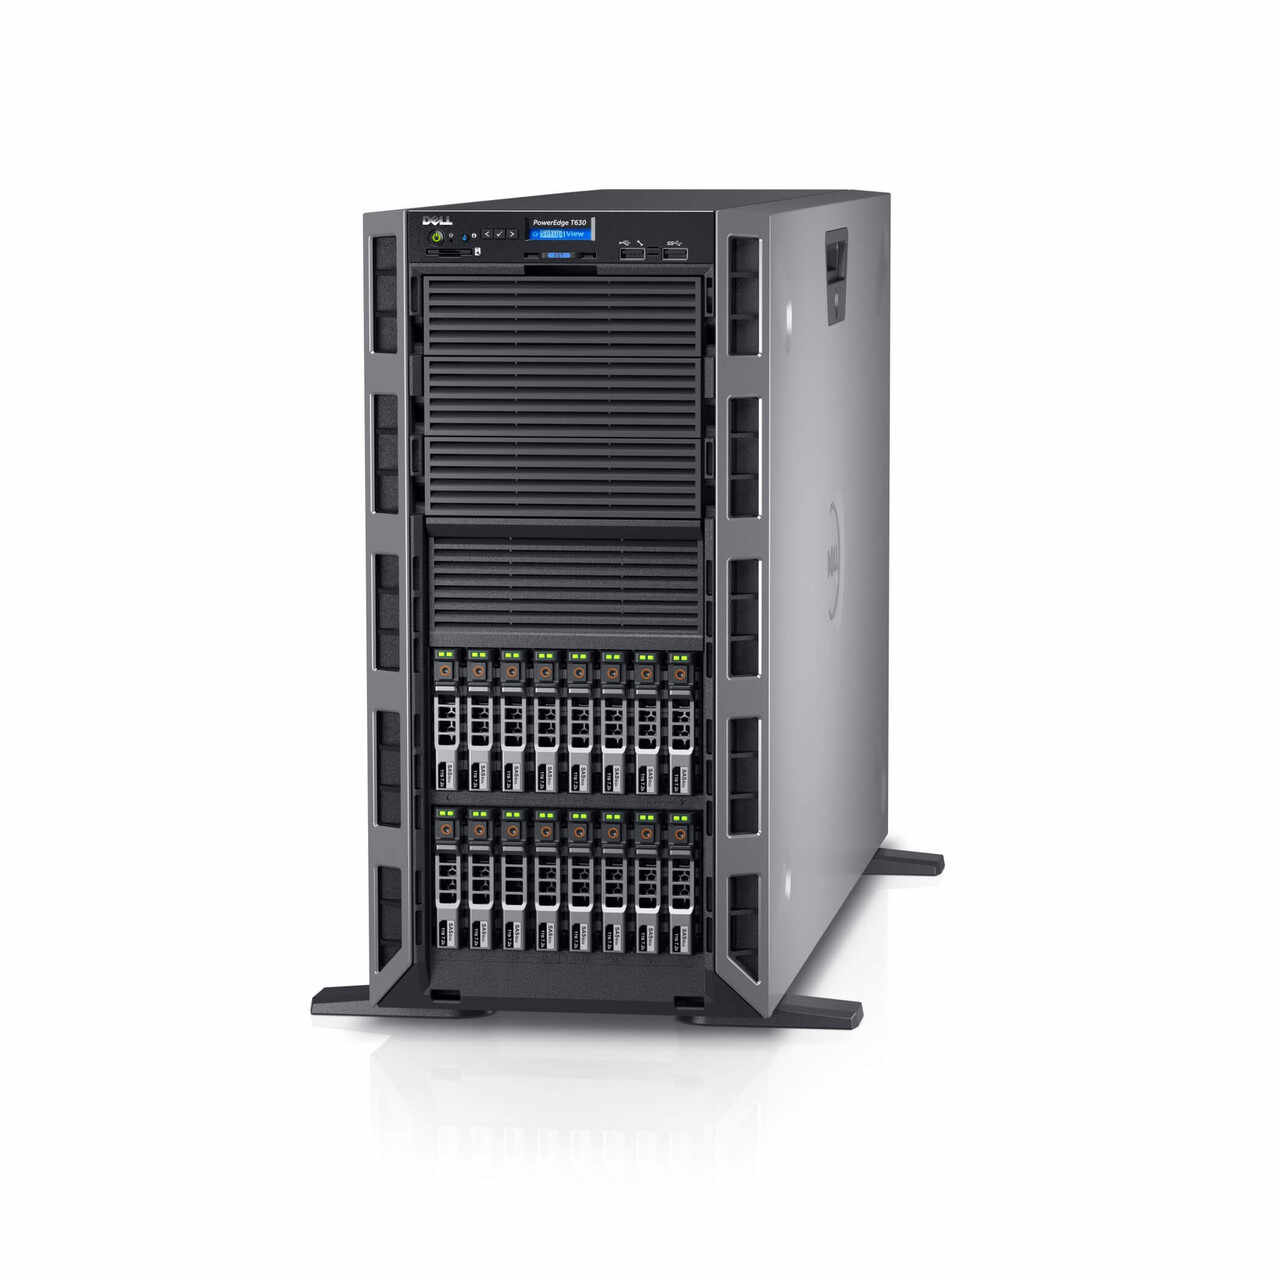 Server Refurbished Dell PowerEdge T630 Tower, 1 x Intel Deca Core Xeon E5-2660 V3 2.60 - 3.30GHz, 64GB DDR4 ECC REG, 2 x SSD 1TB Samsung Evo + 2 x 1.2TB HDD SAS/10k, RAID PERC H730P/2GB, iDrac8 Enterprise, 2 X PSU 750W